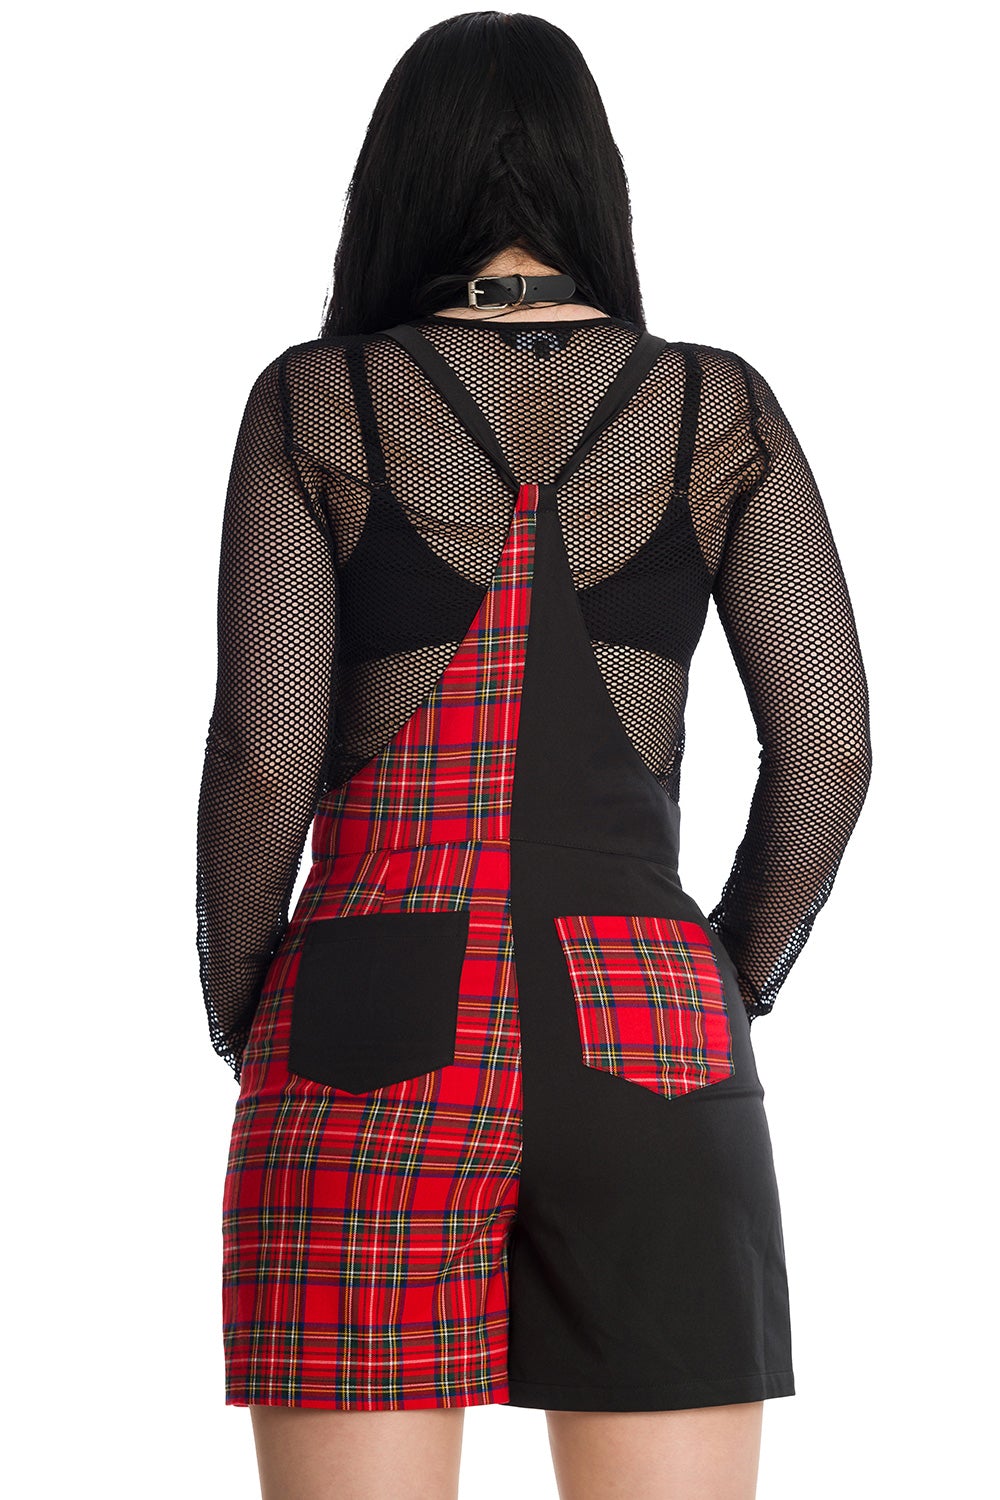 Alternative model wearing half black and half red tartan print dungarees with mesh crop top underneath